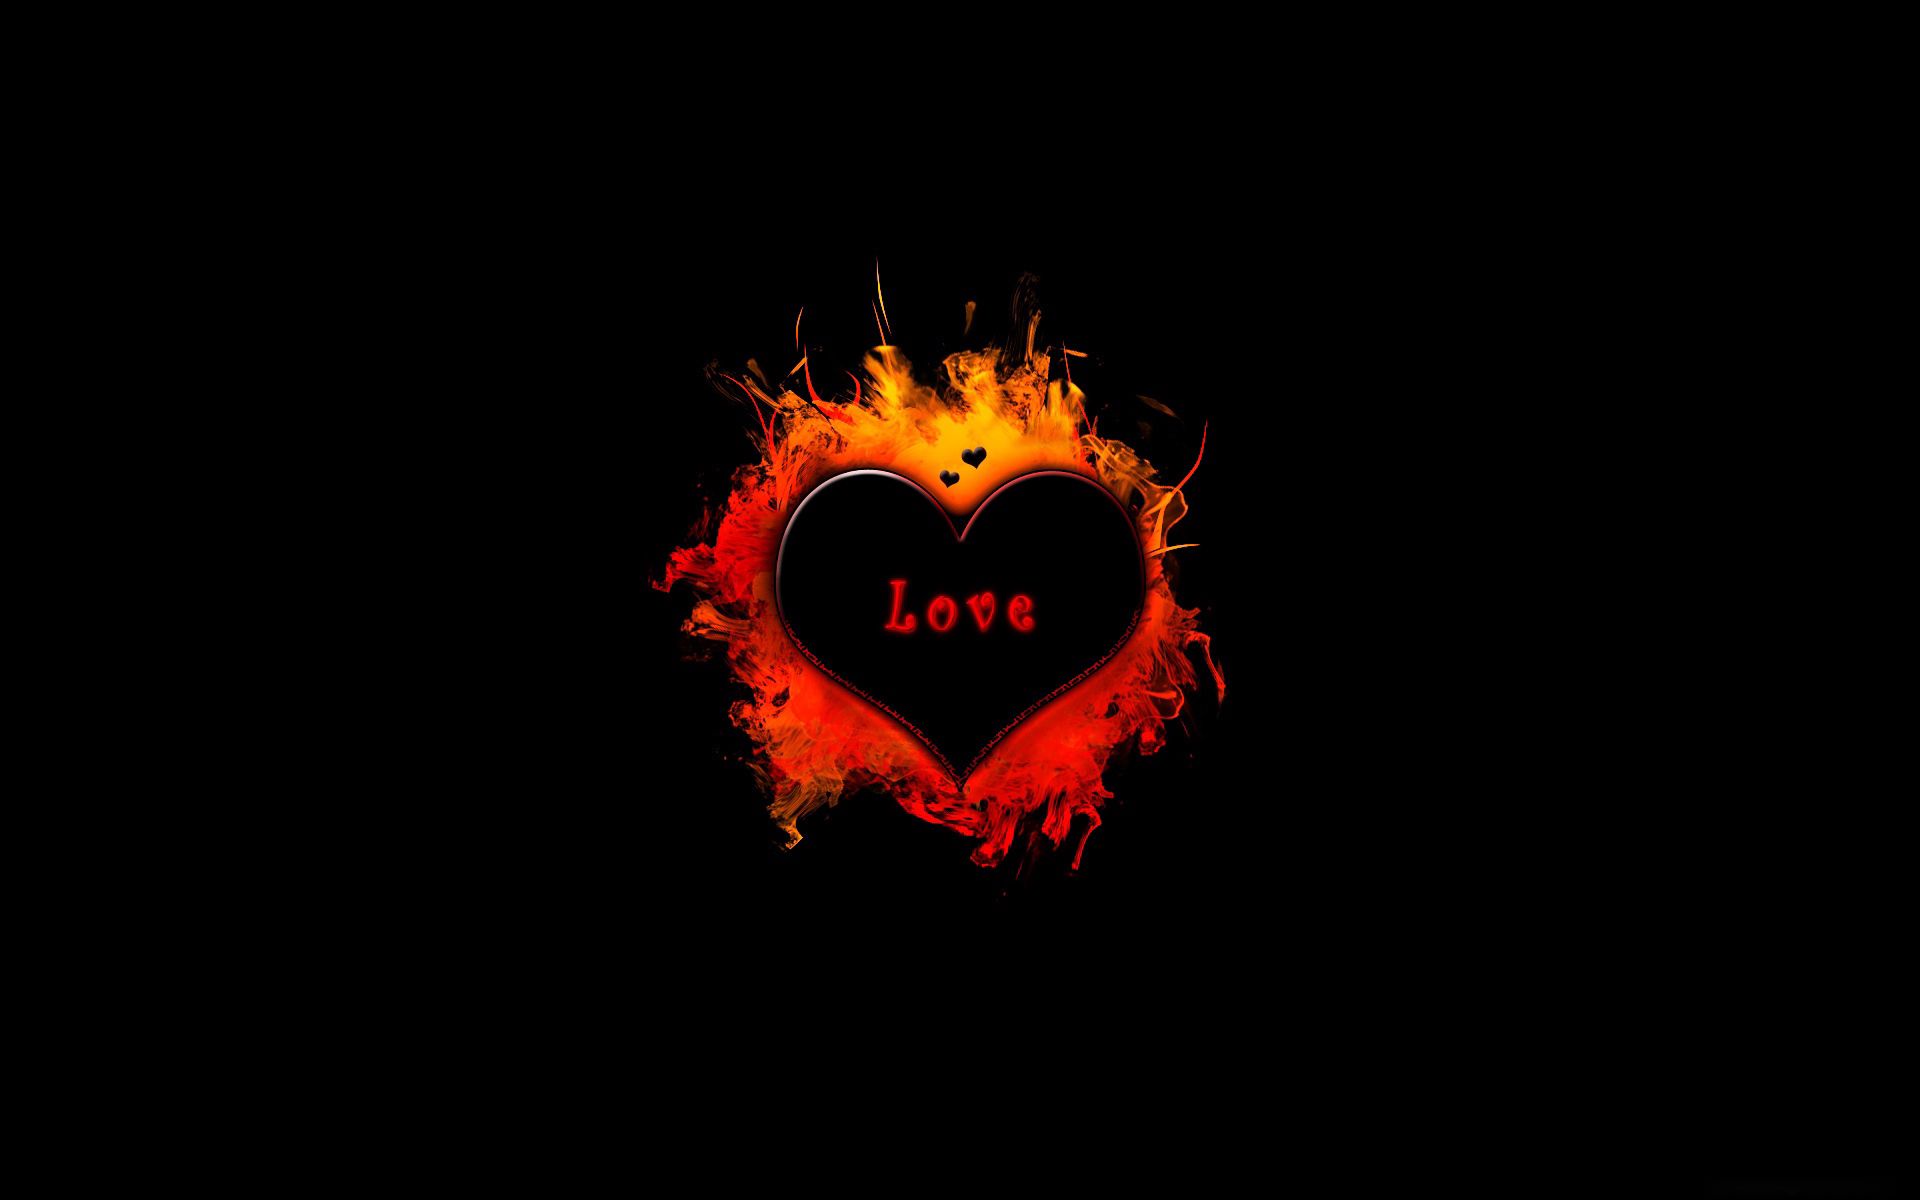 shadow, heart, love, flame, fire cellphone